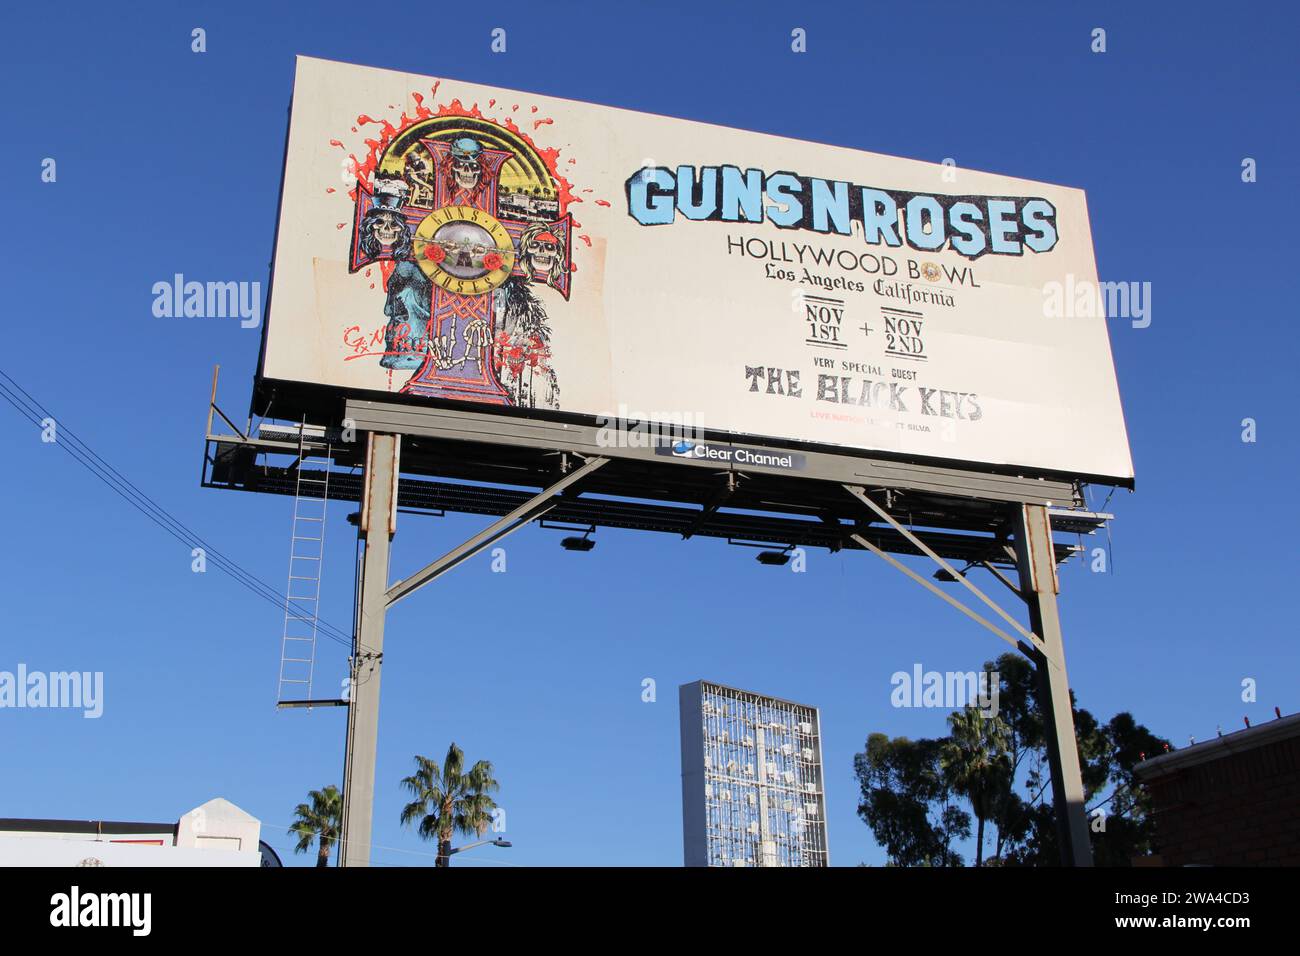 Guns N Roses The Black Keys Billboard Sunset Strip Hollywood Los Angeles Stockfoto Stockfoto